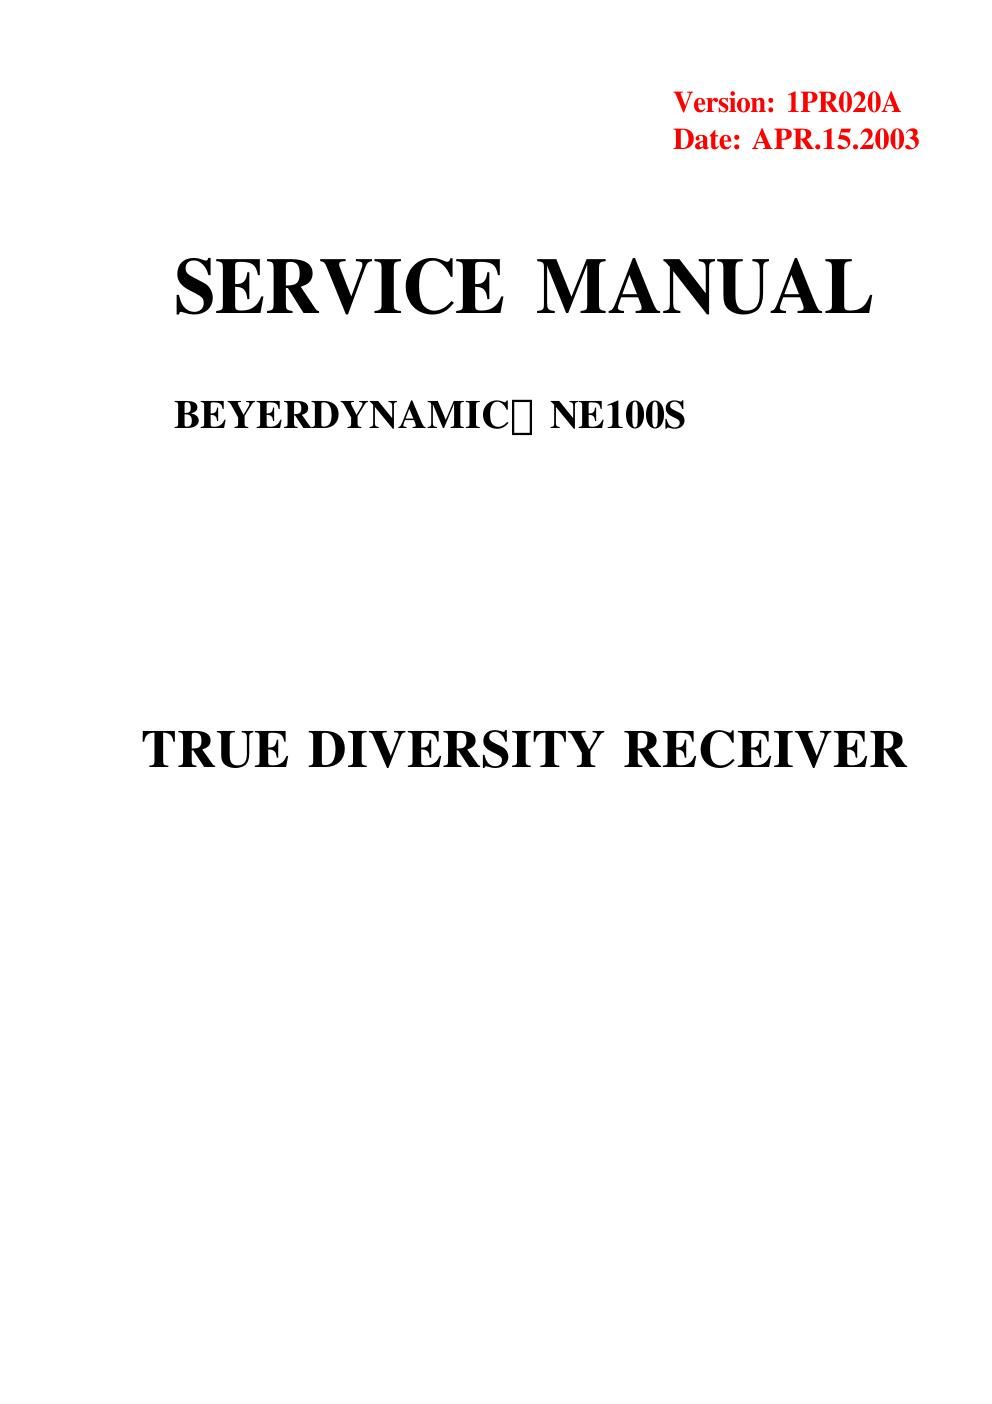 Beyerdynamic NE100S Receiver Service Manual